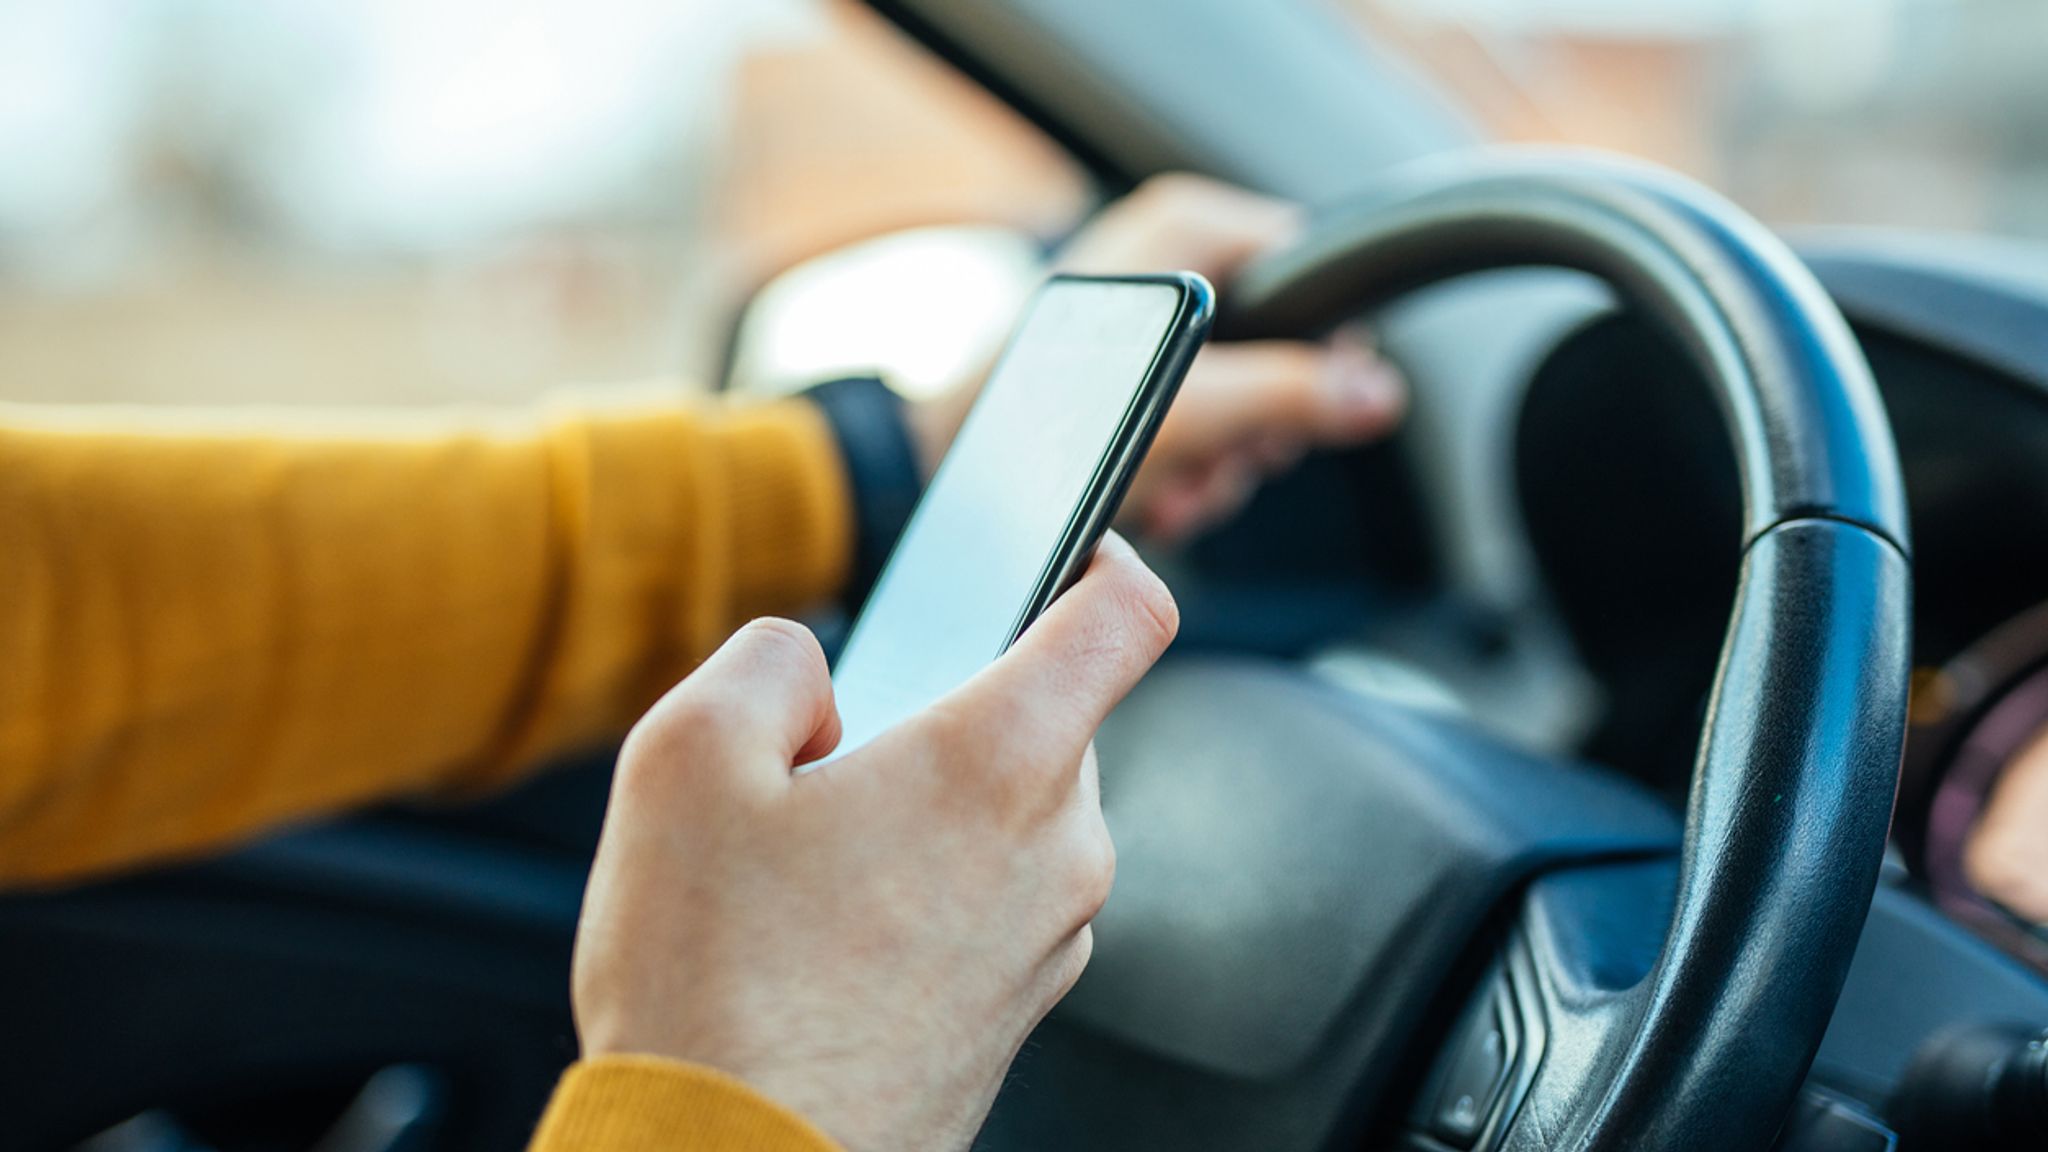 Penggunaan Smartphone Saat Berkendara: Bahaya dan Penyebab Kecelakaan